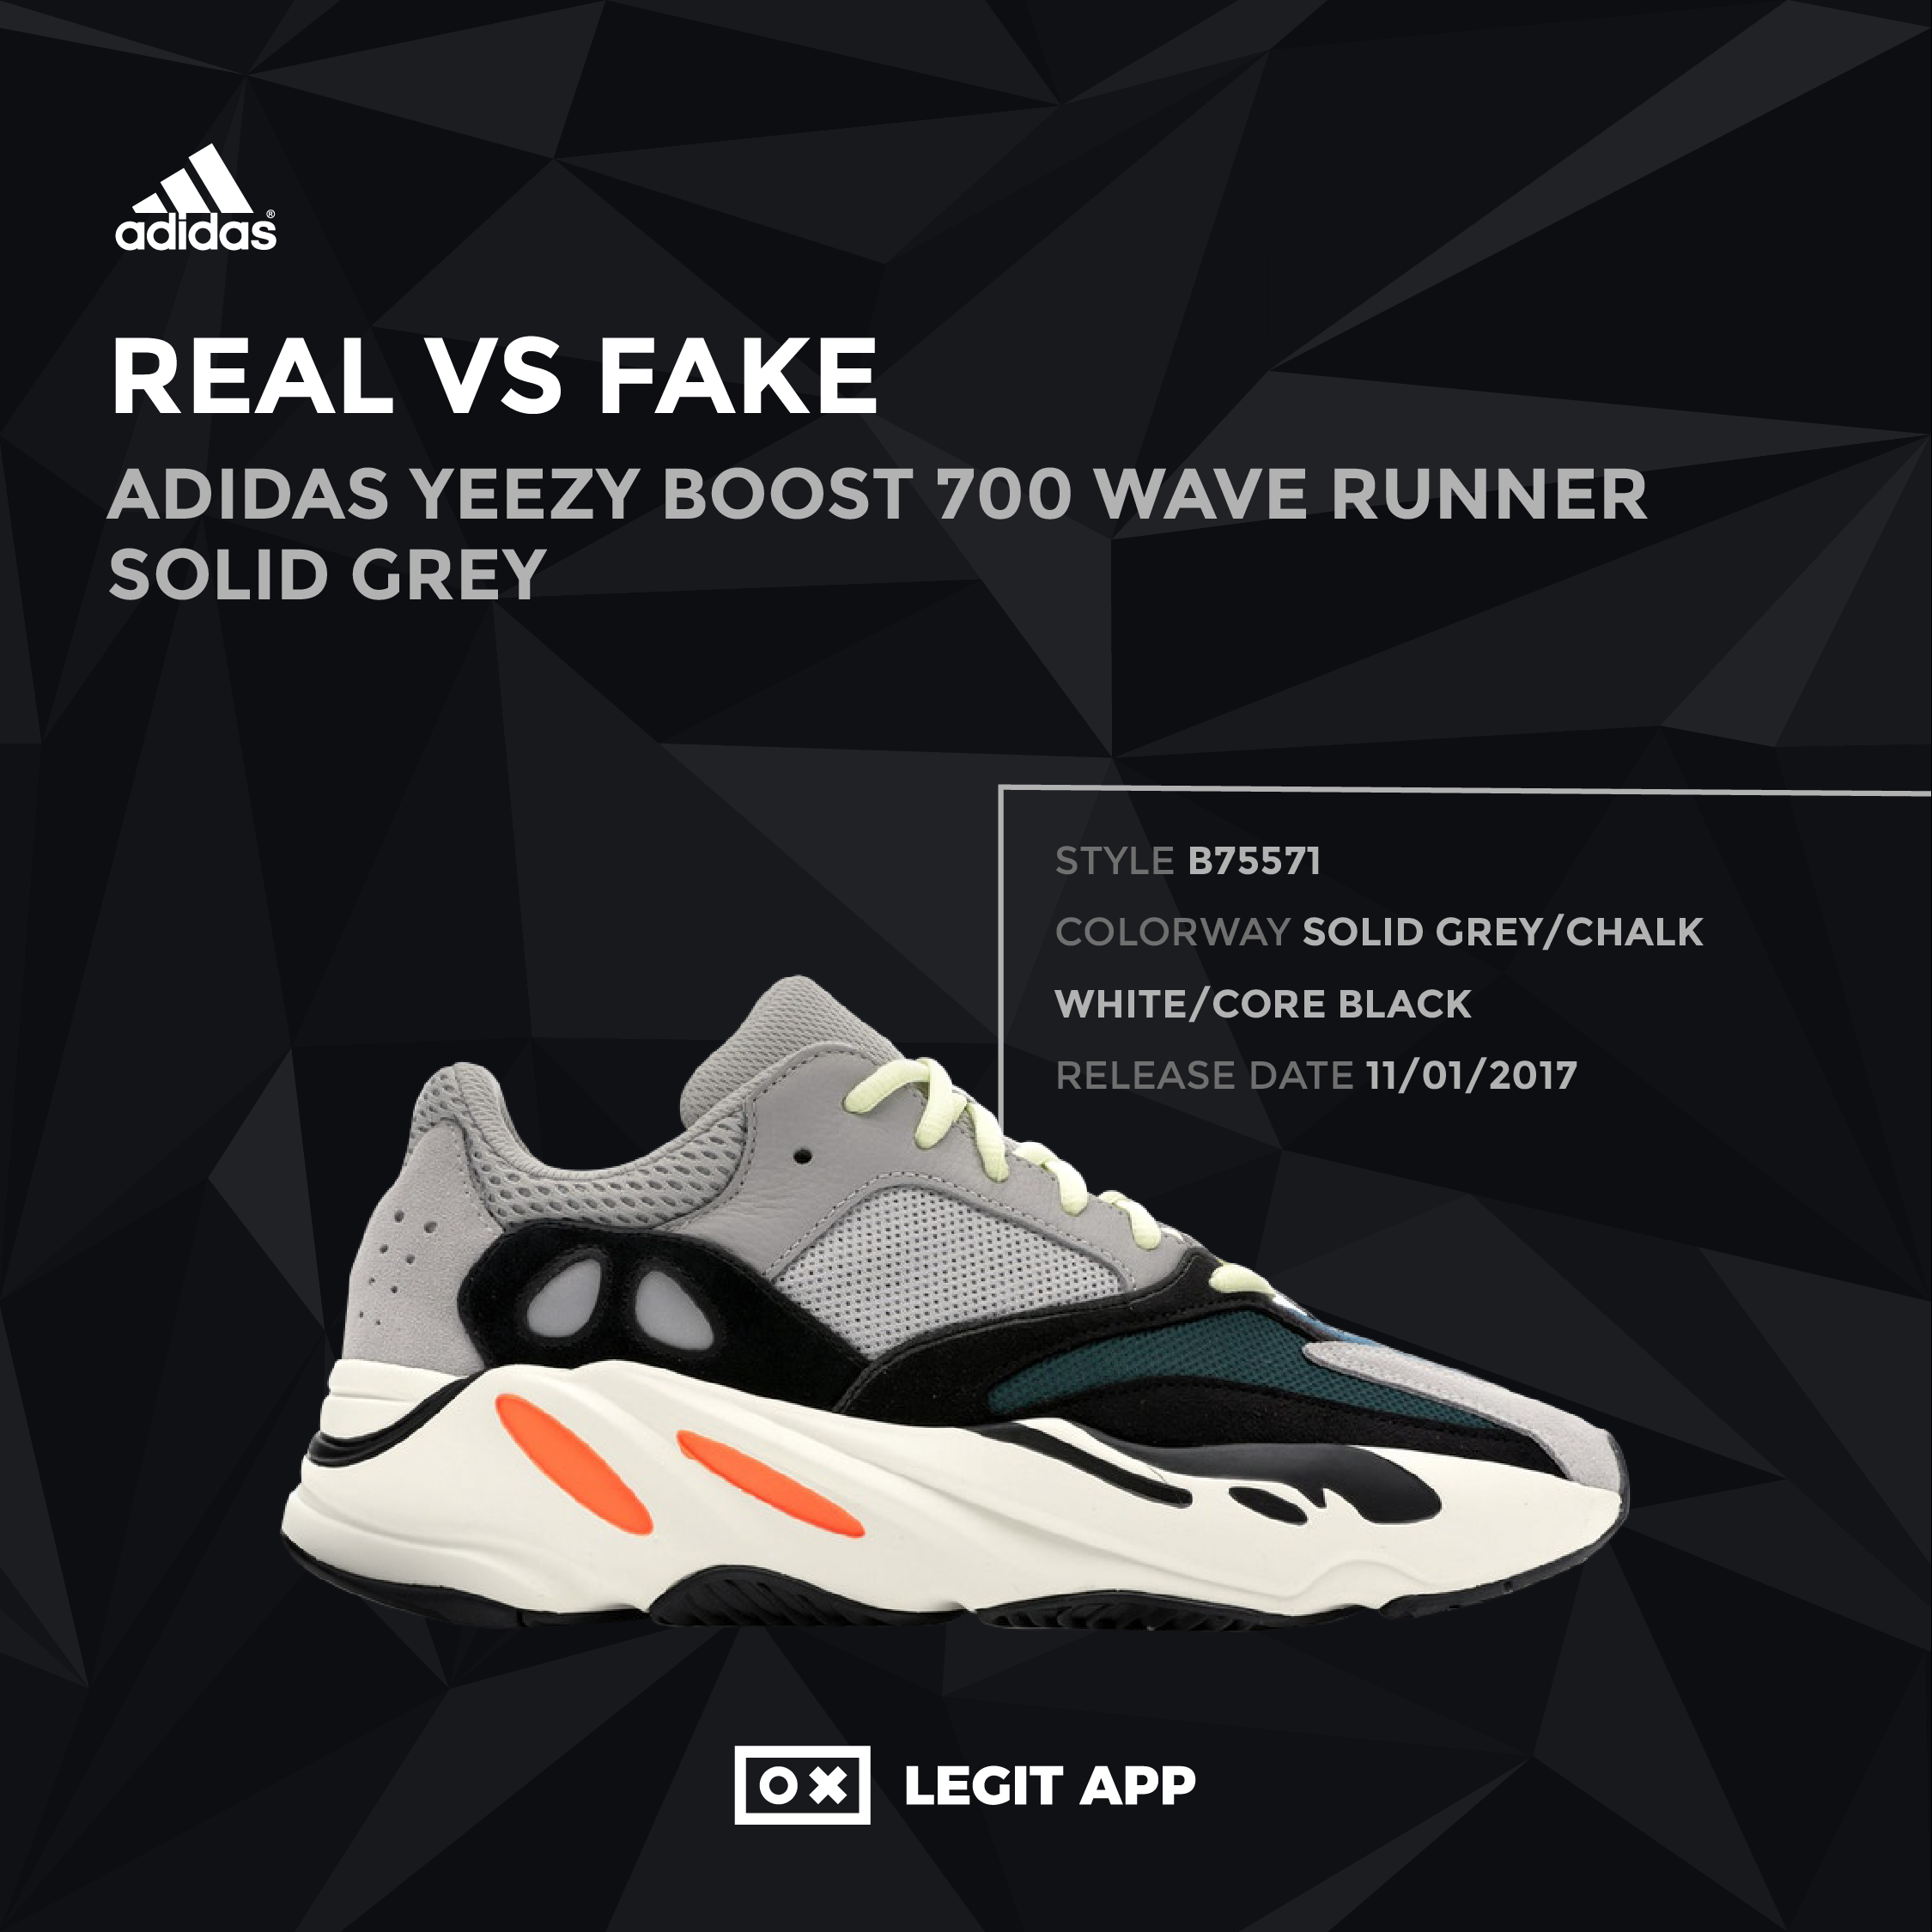 fake wave runners vs real